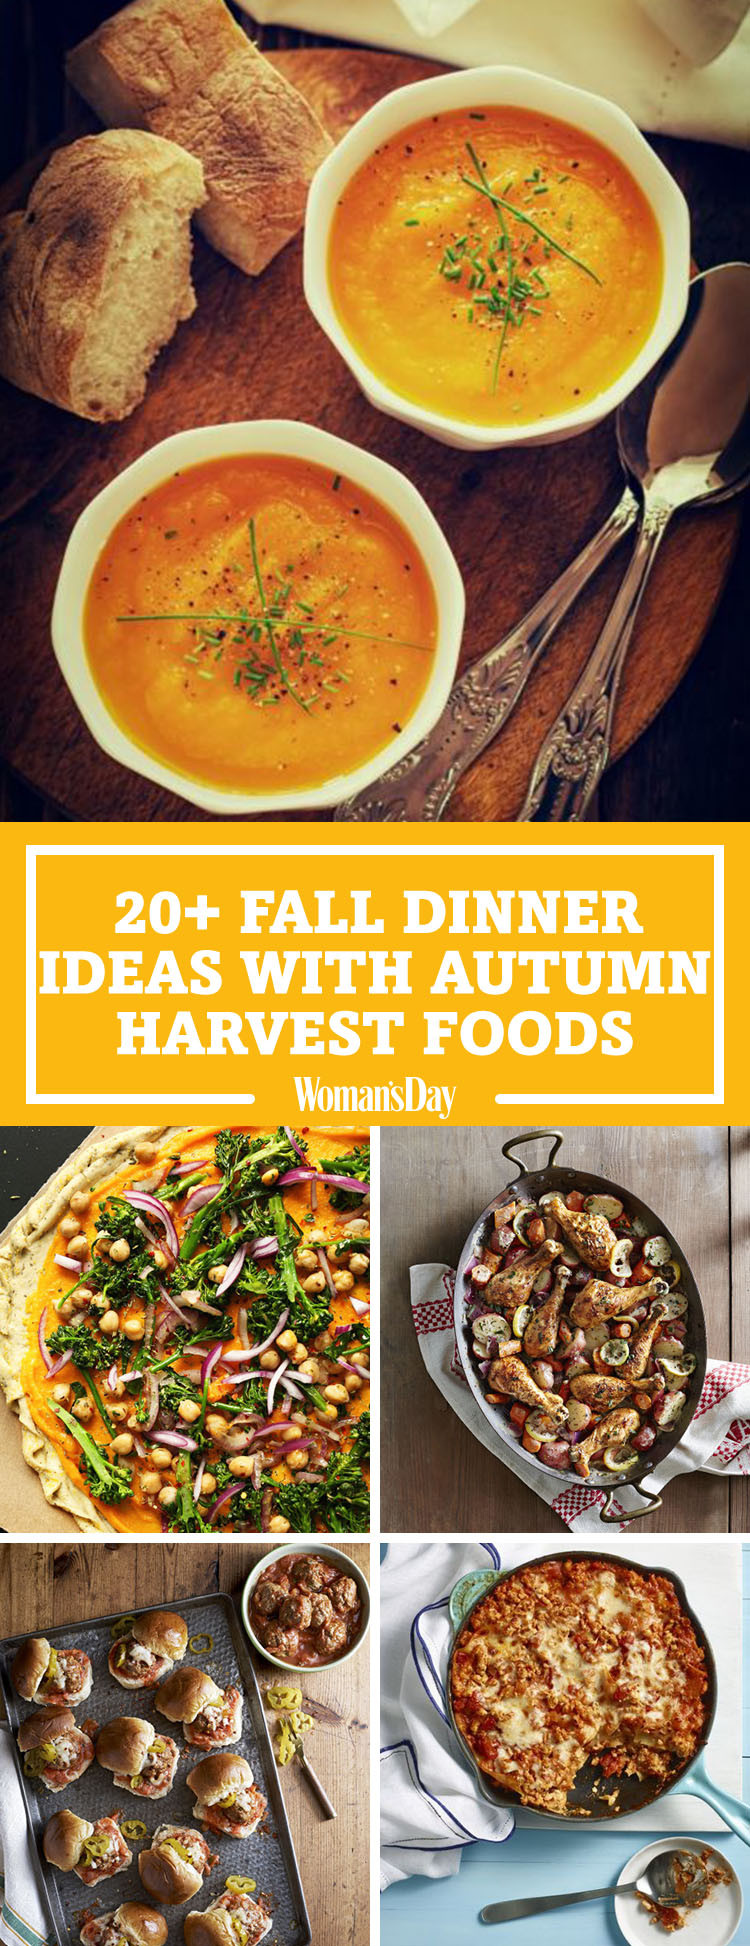 Fall Supper Ideas
 26 Easy Fall Dinner Ideas Best Dinner Recipes for Autumn